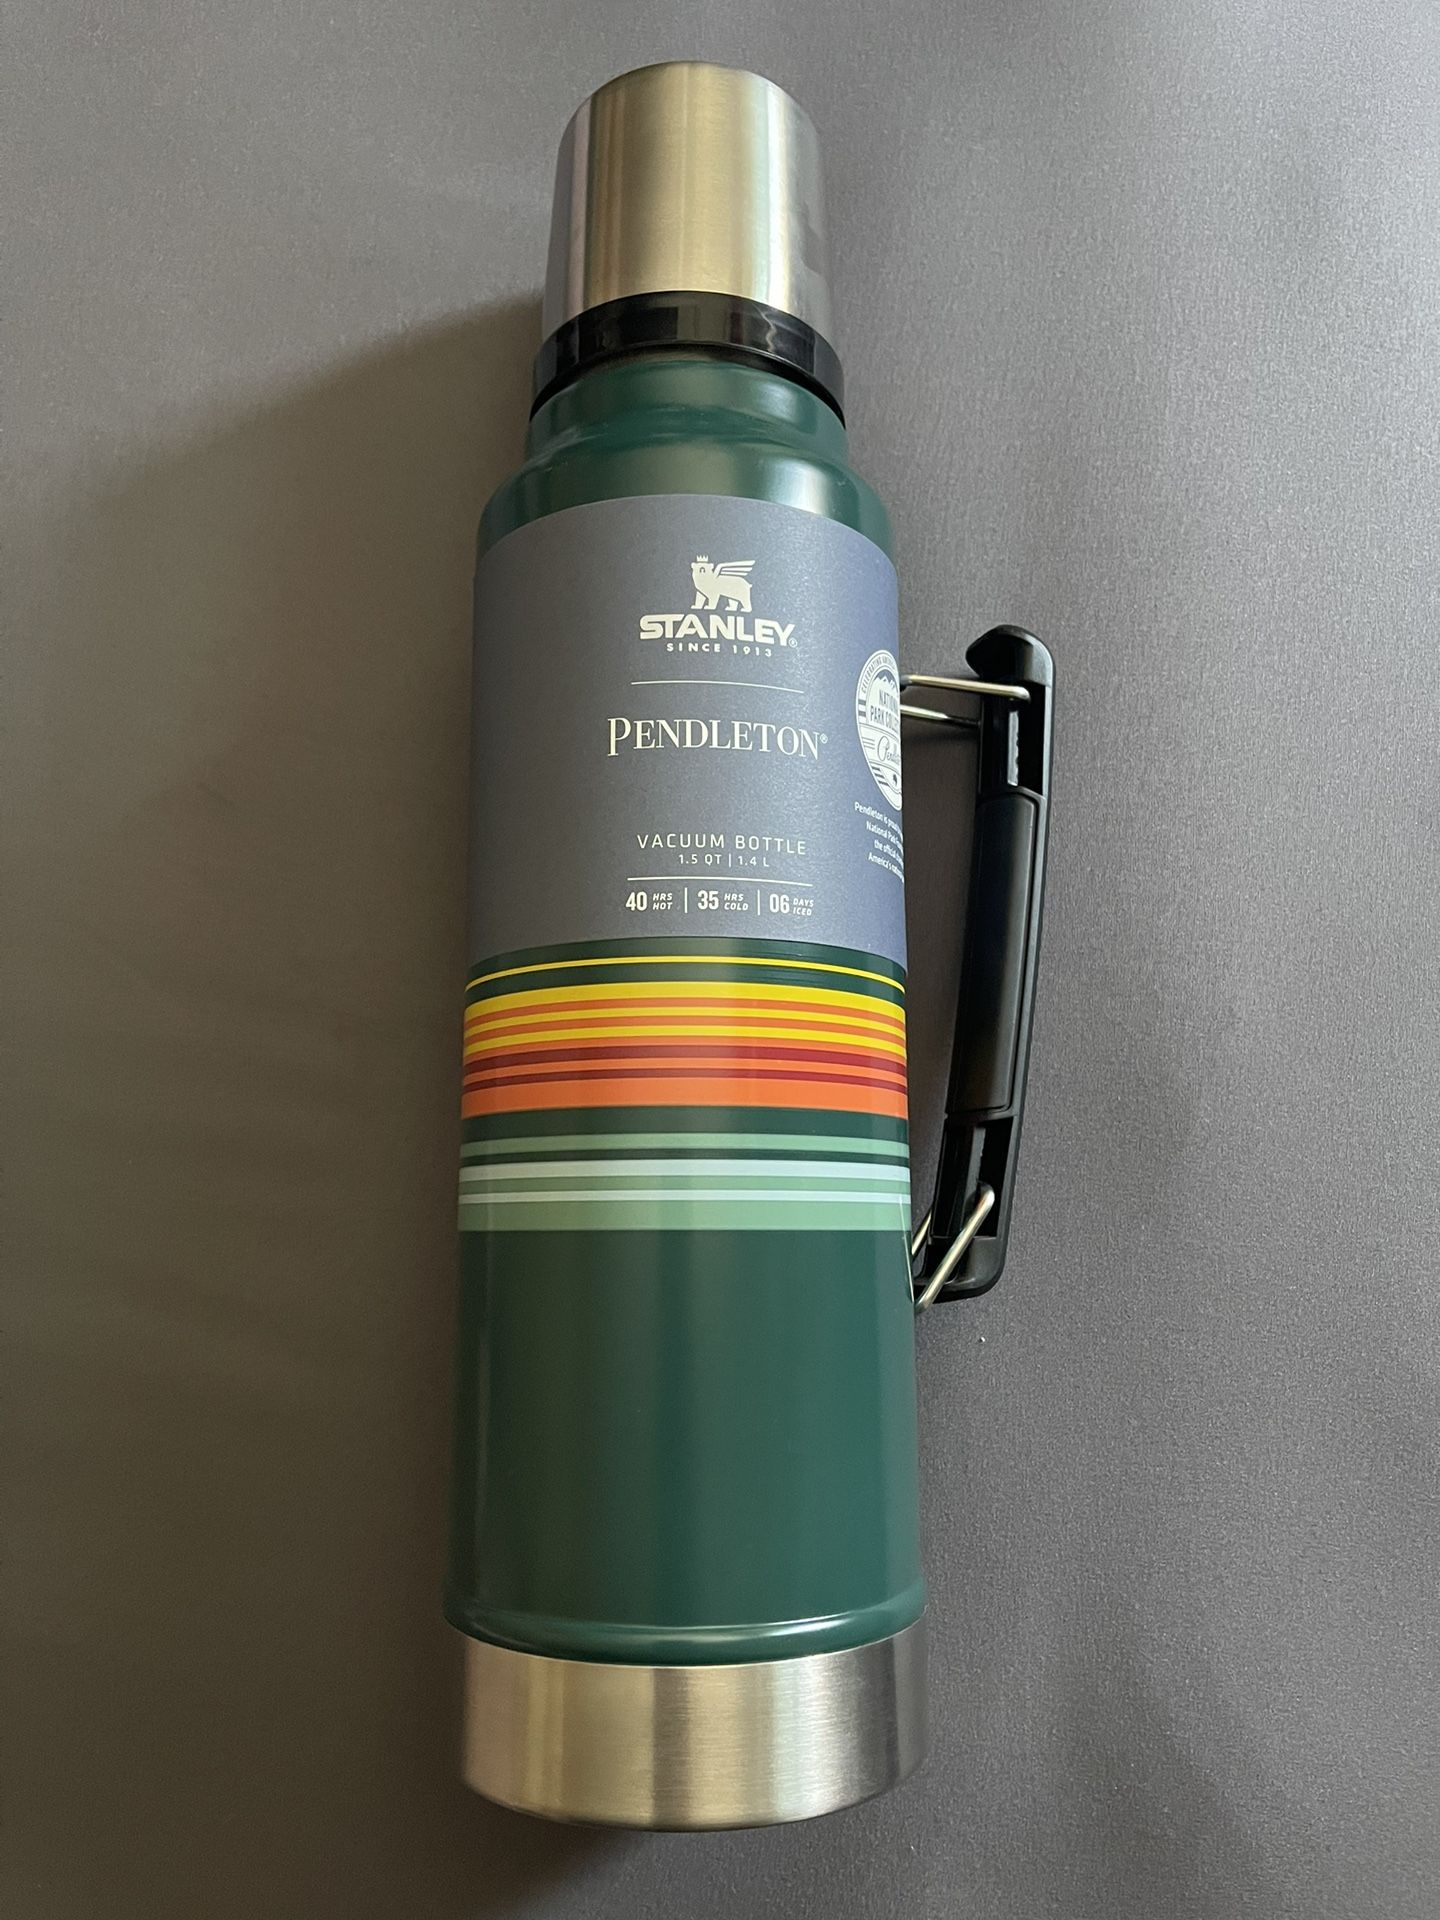 Pendleton Stanley Thermos Vacuum Bottle Lid is Cup Hot Cold, 1.5qt